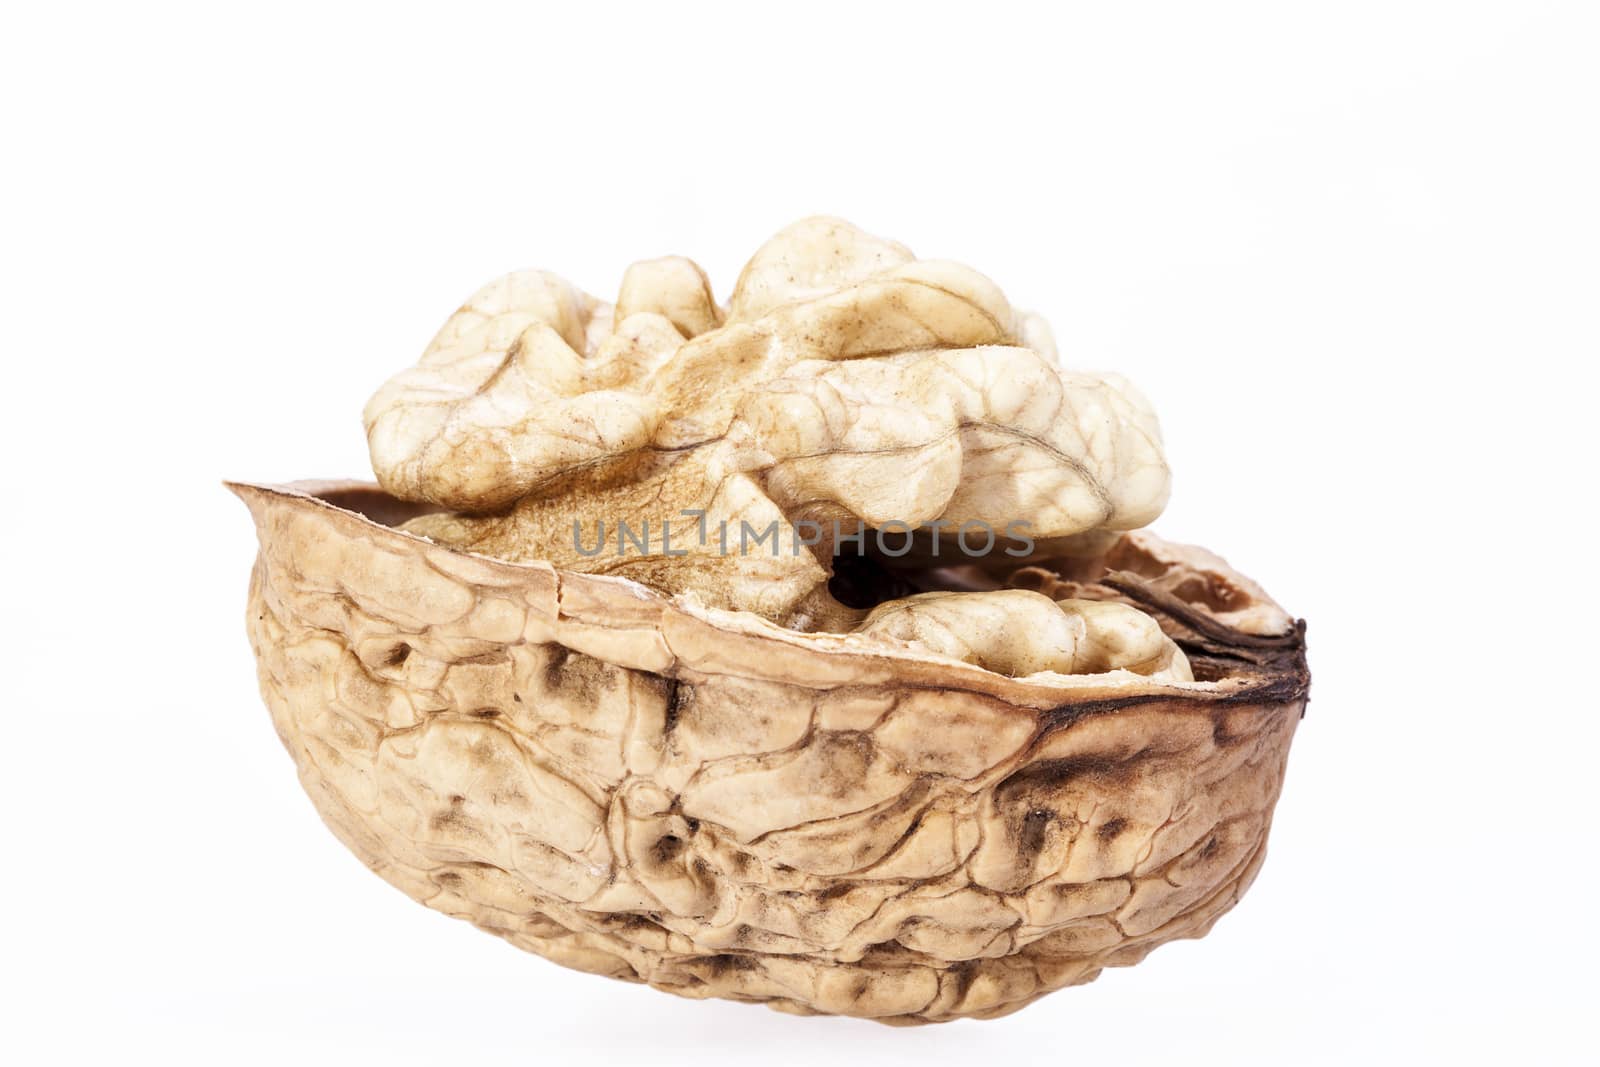 Single  walnut with half nutshell  isolated on white background, close up
